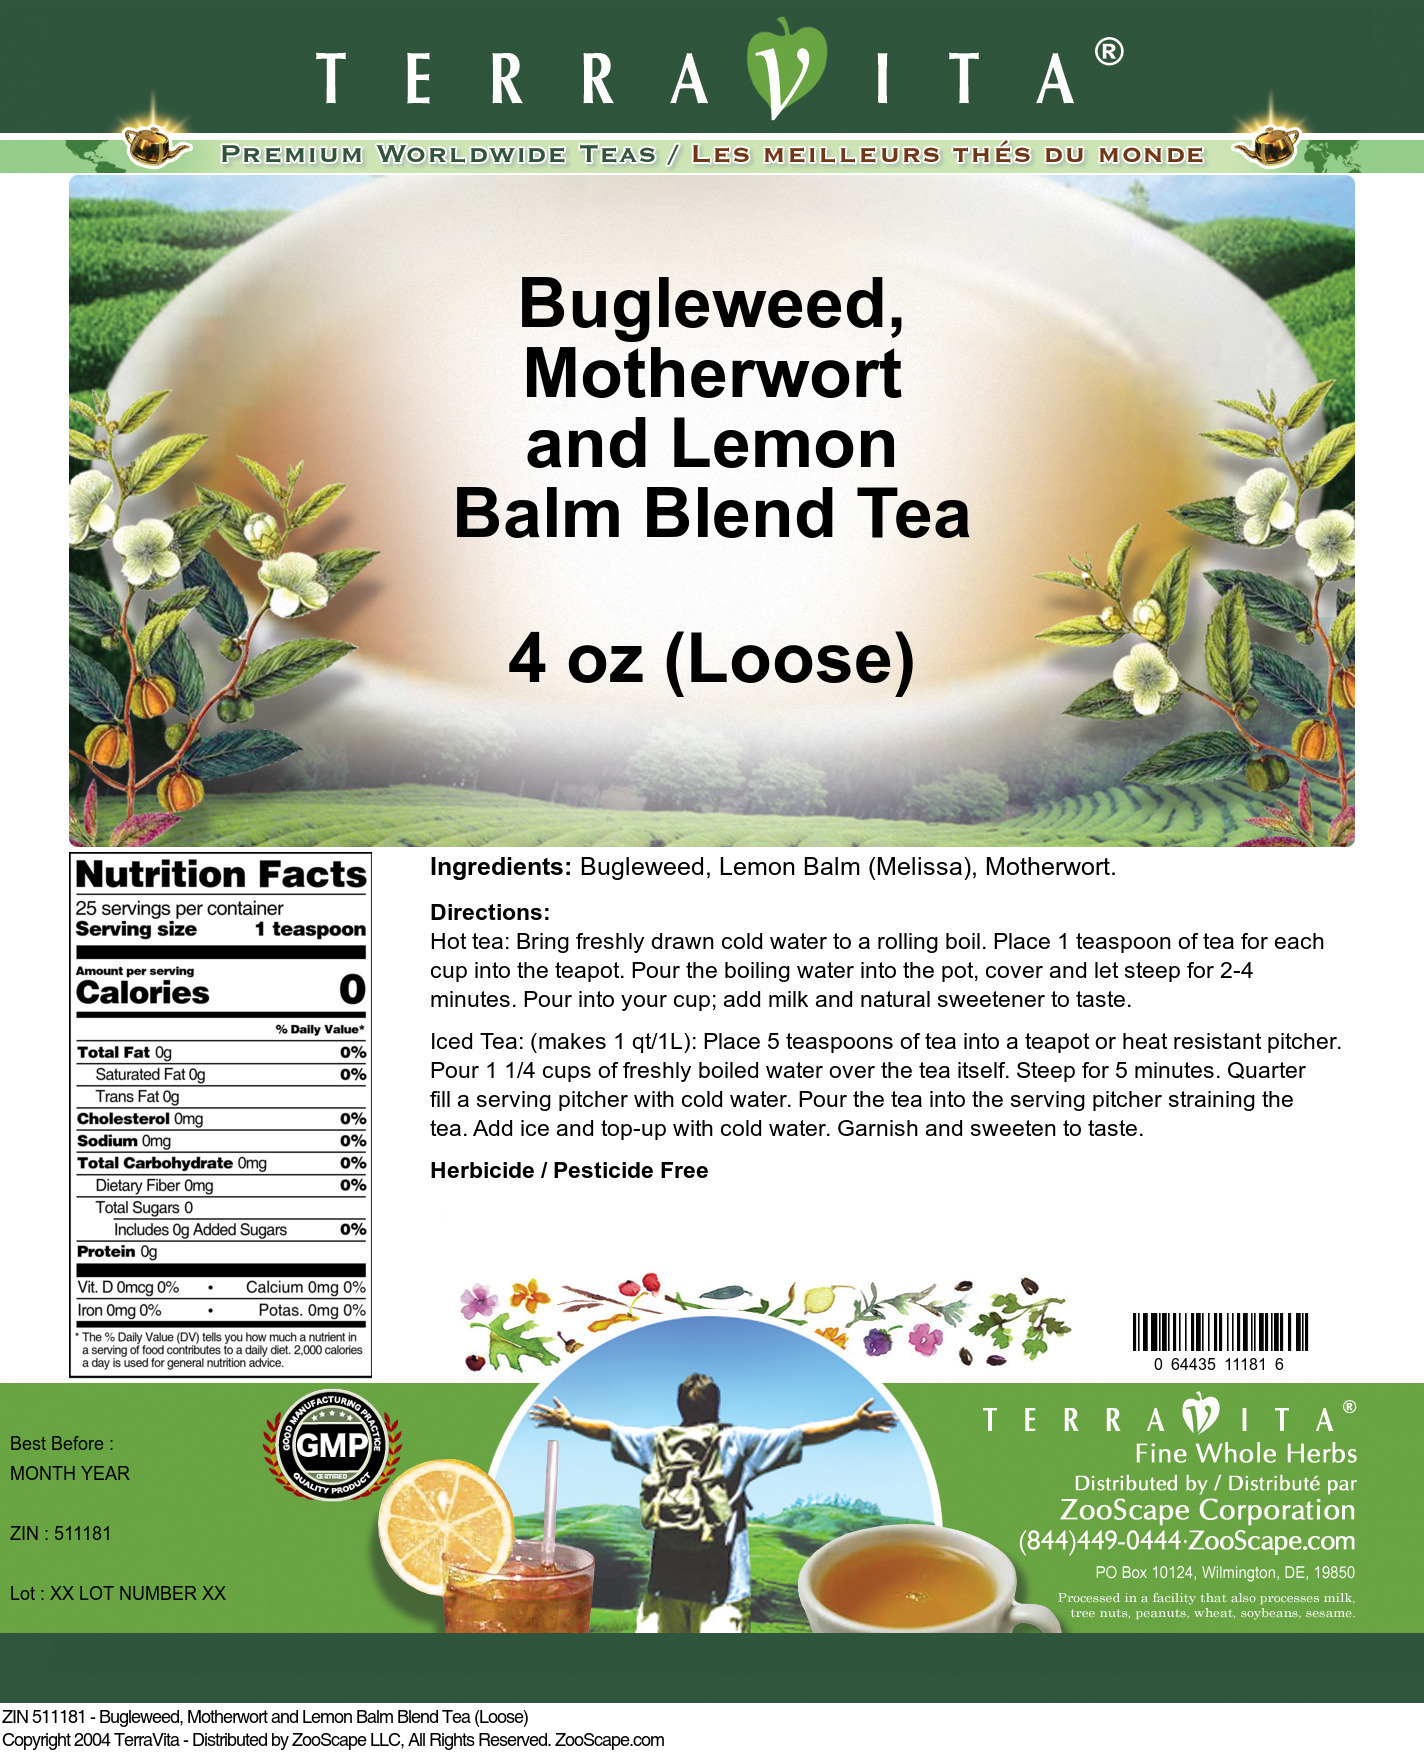 Bugleweed, Motherwort and Lemon Balm Blend Tea (Loose) - Label